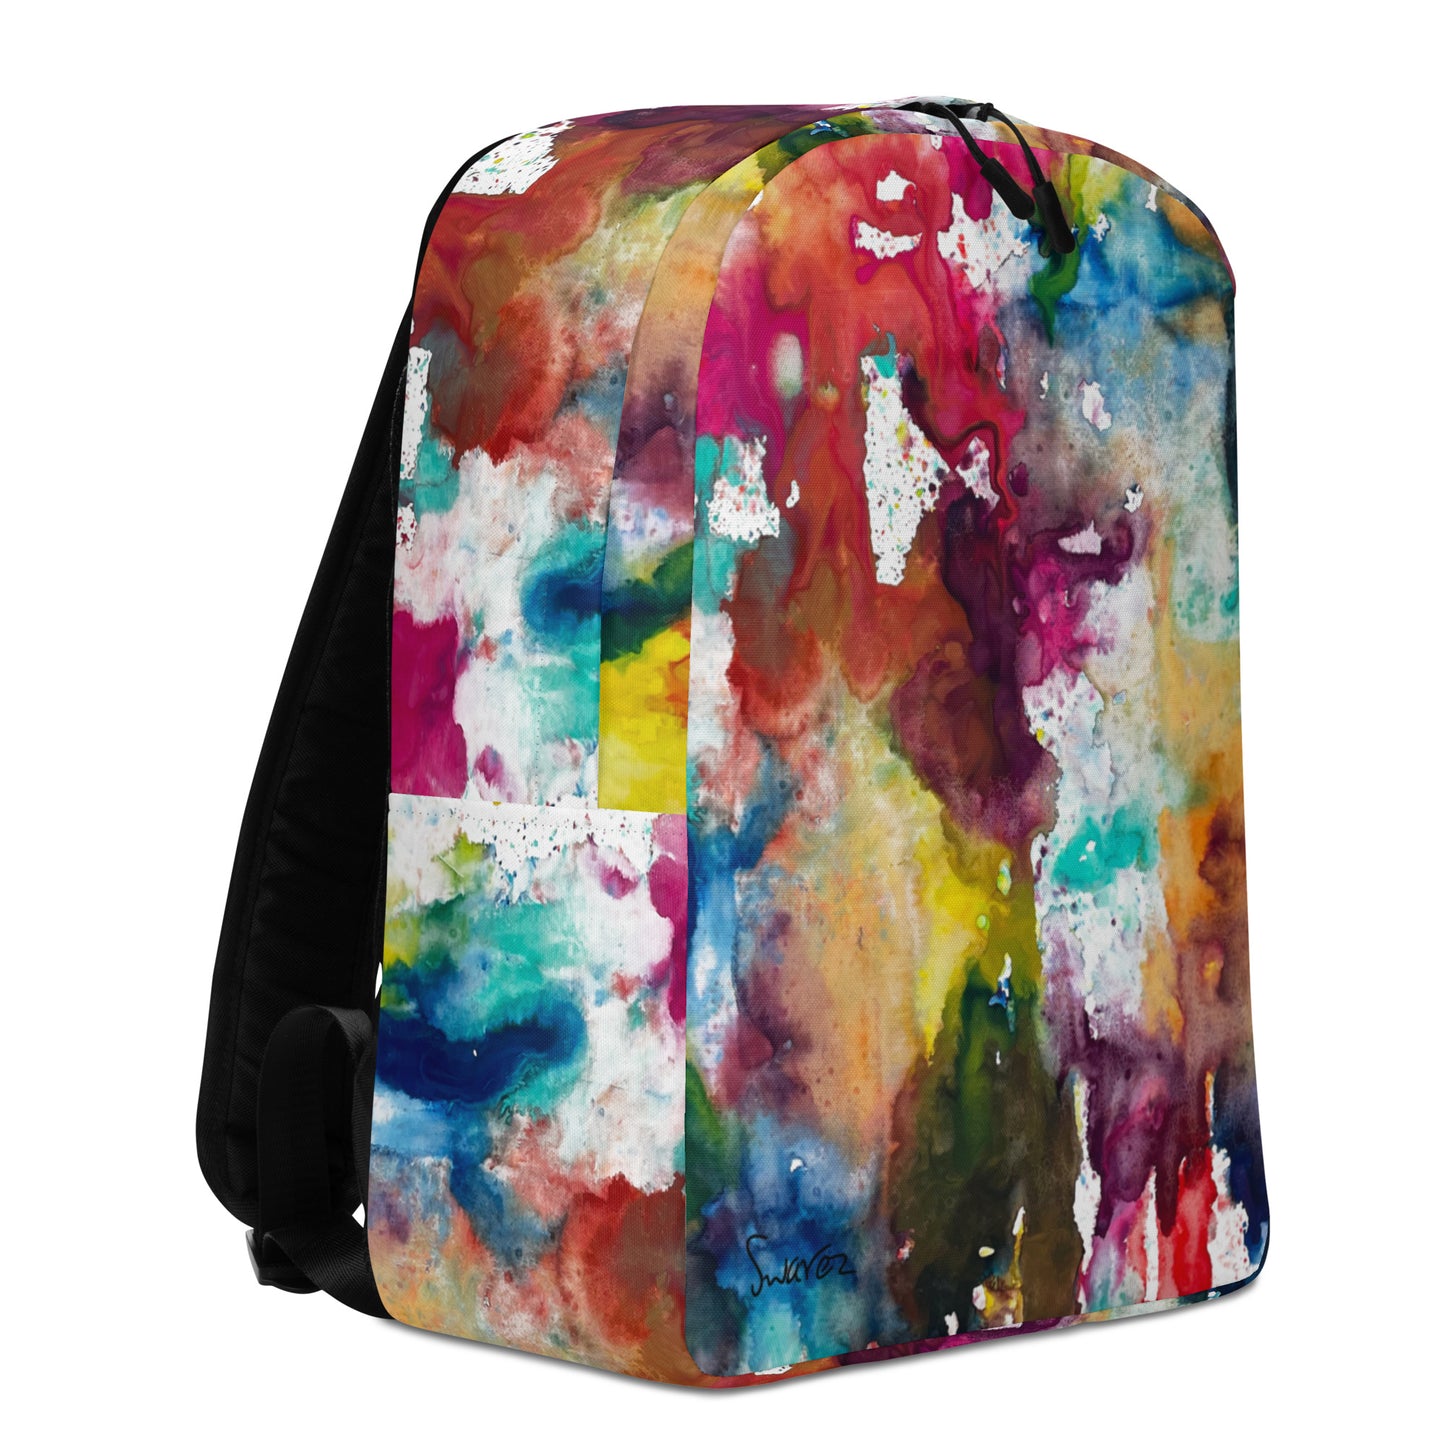 Minimalist Backpack - Dawn Eclipse design